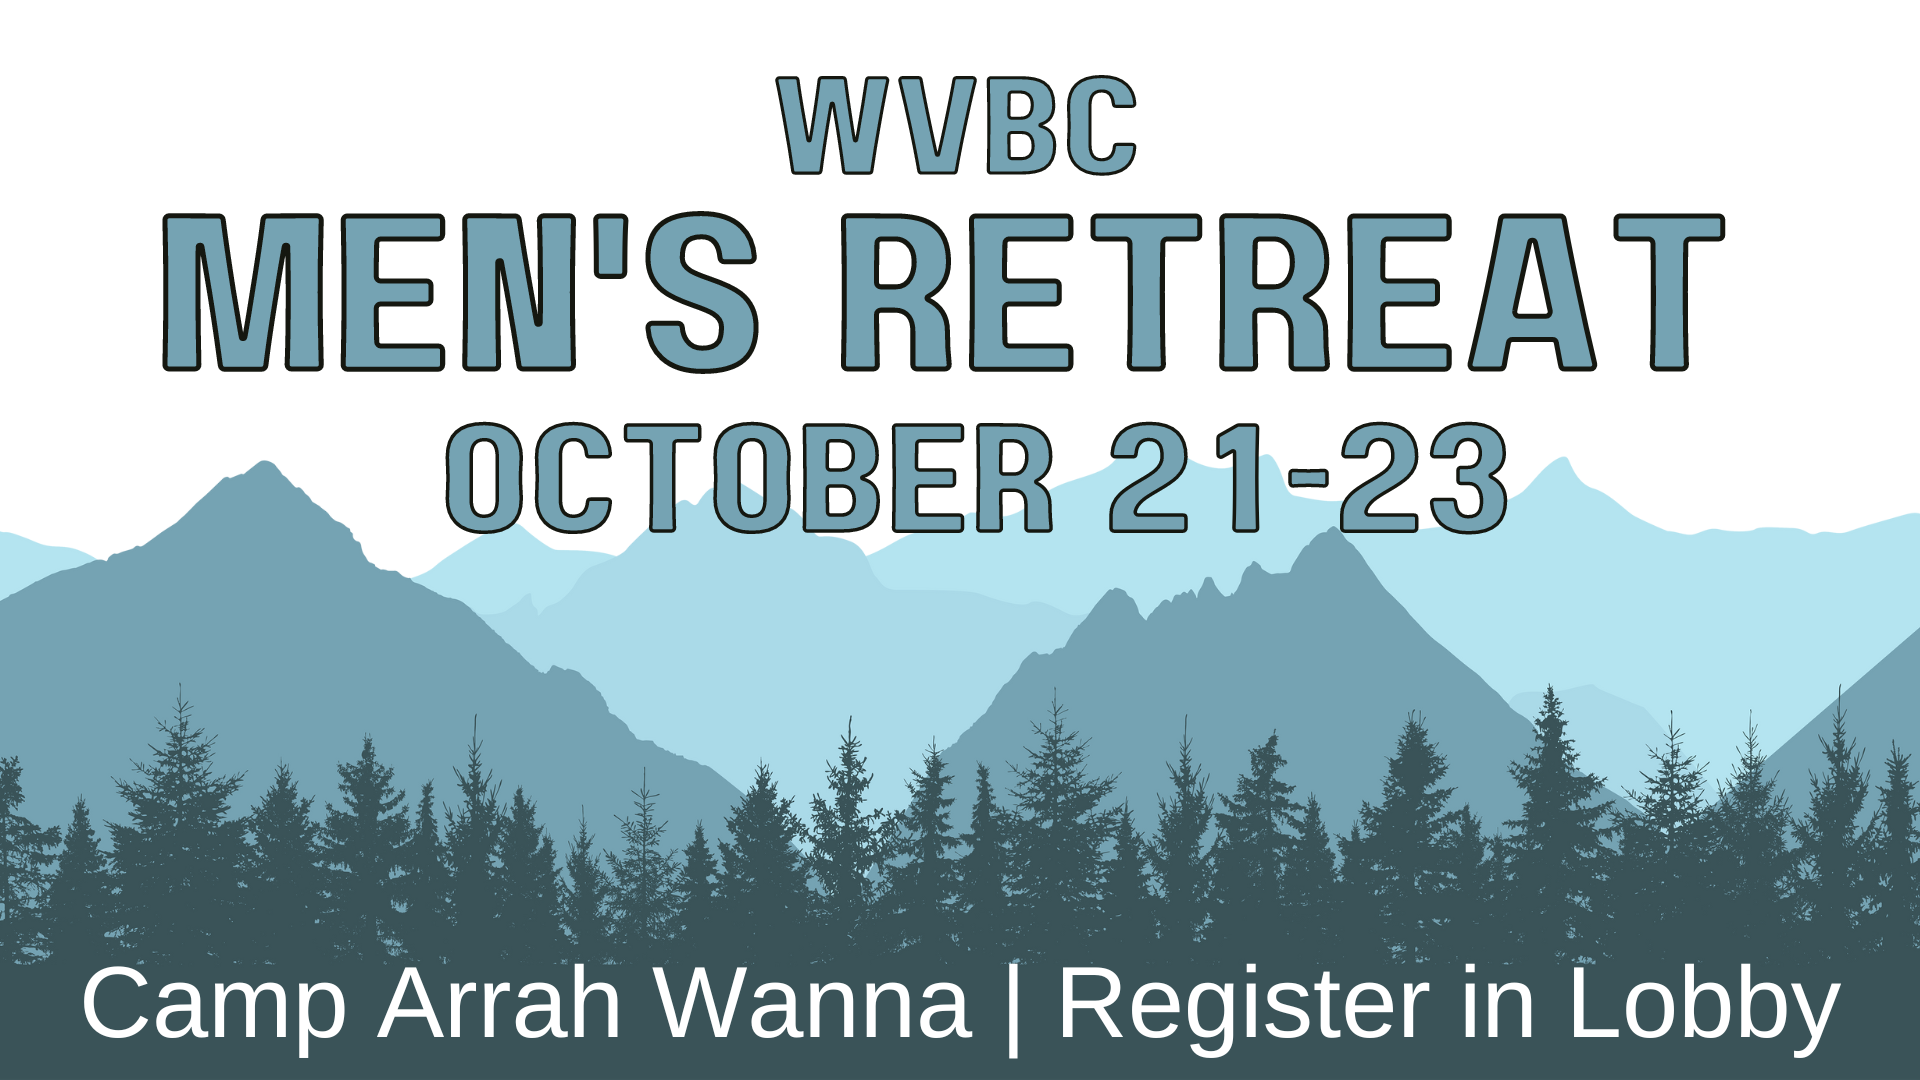 WVBC Men's Retreat October 21-23